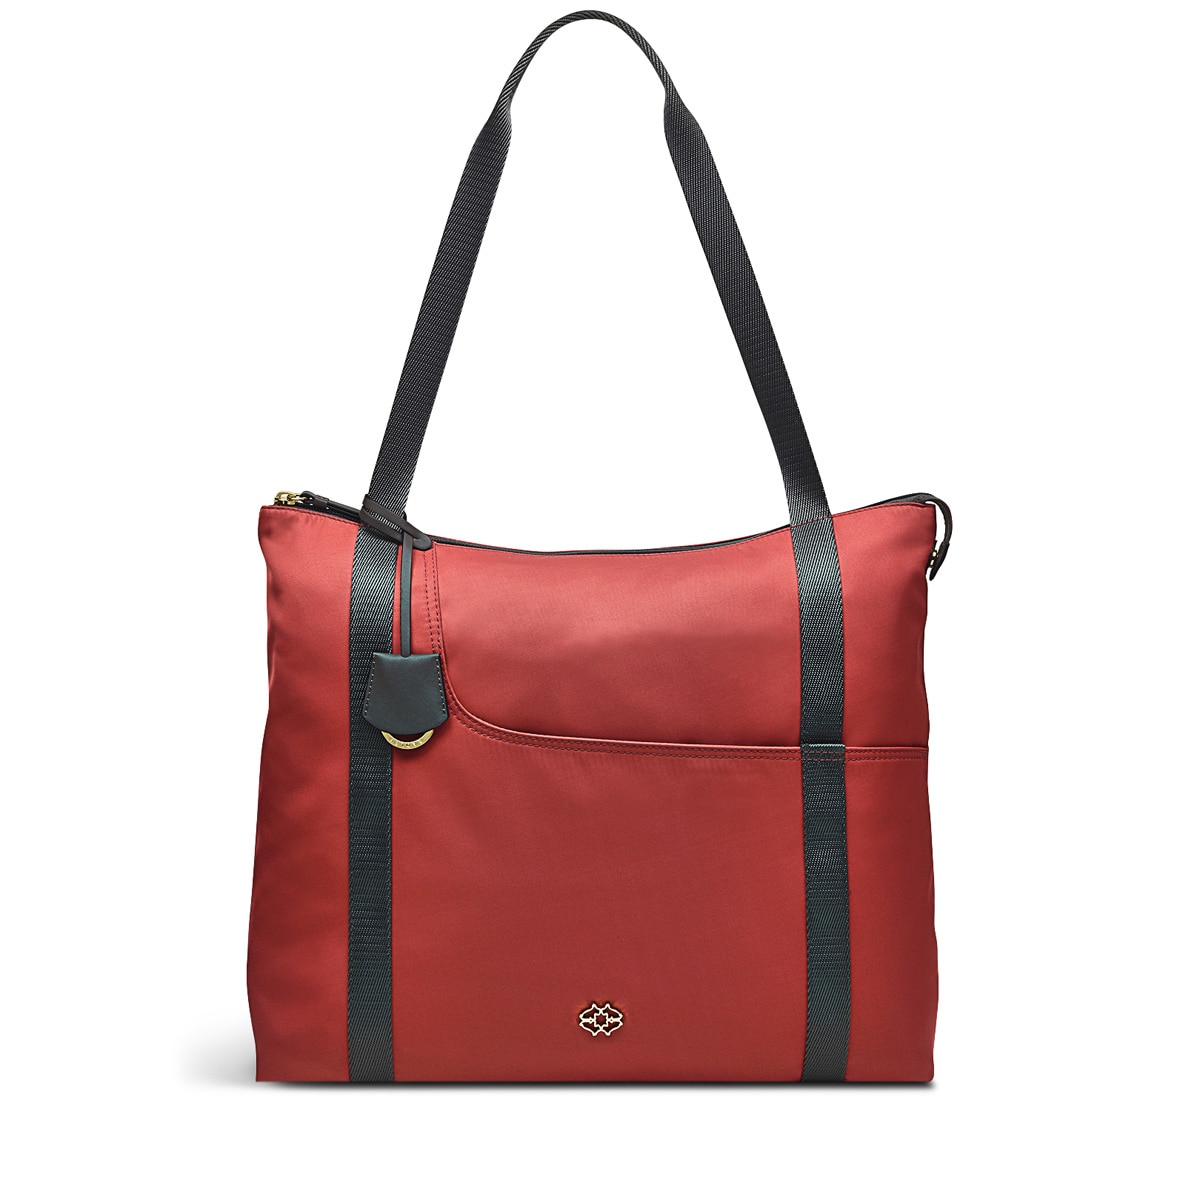 Radley London 24/7 Medium Ziptop Shoulder Bag